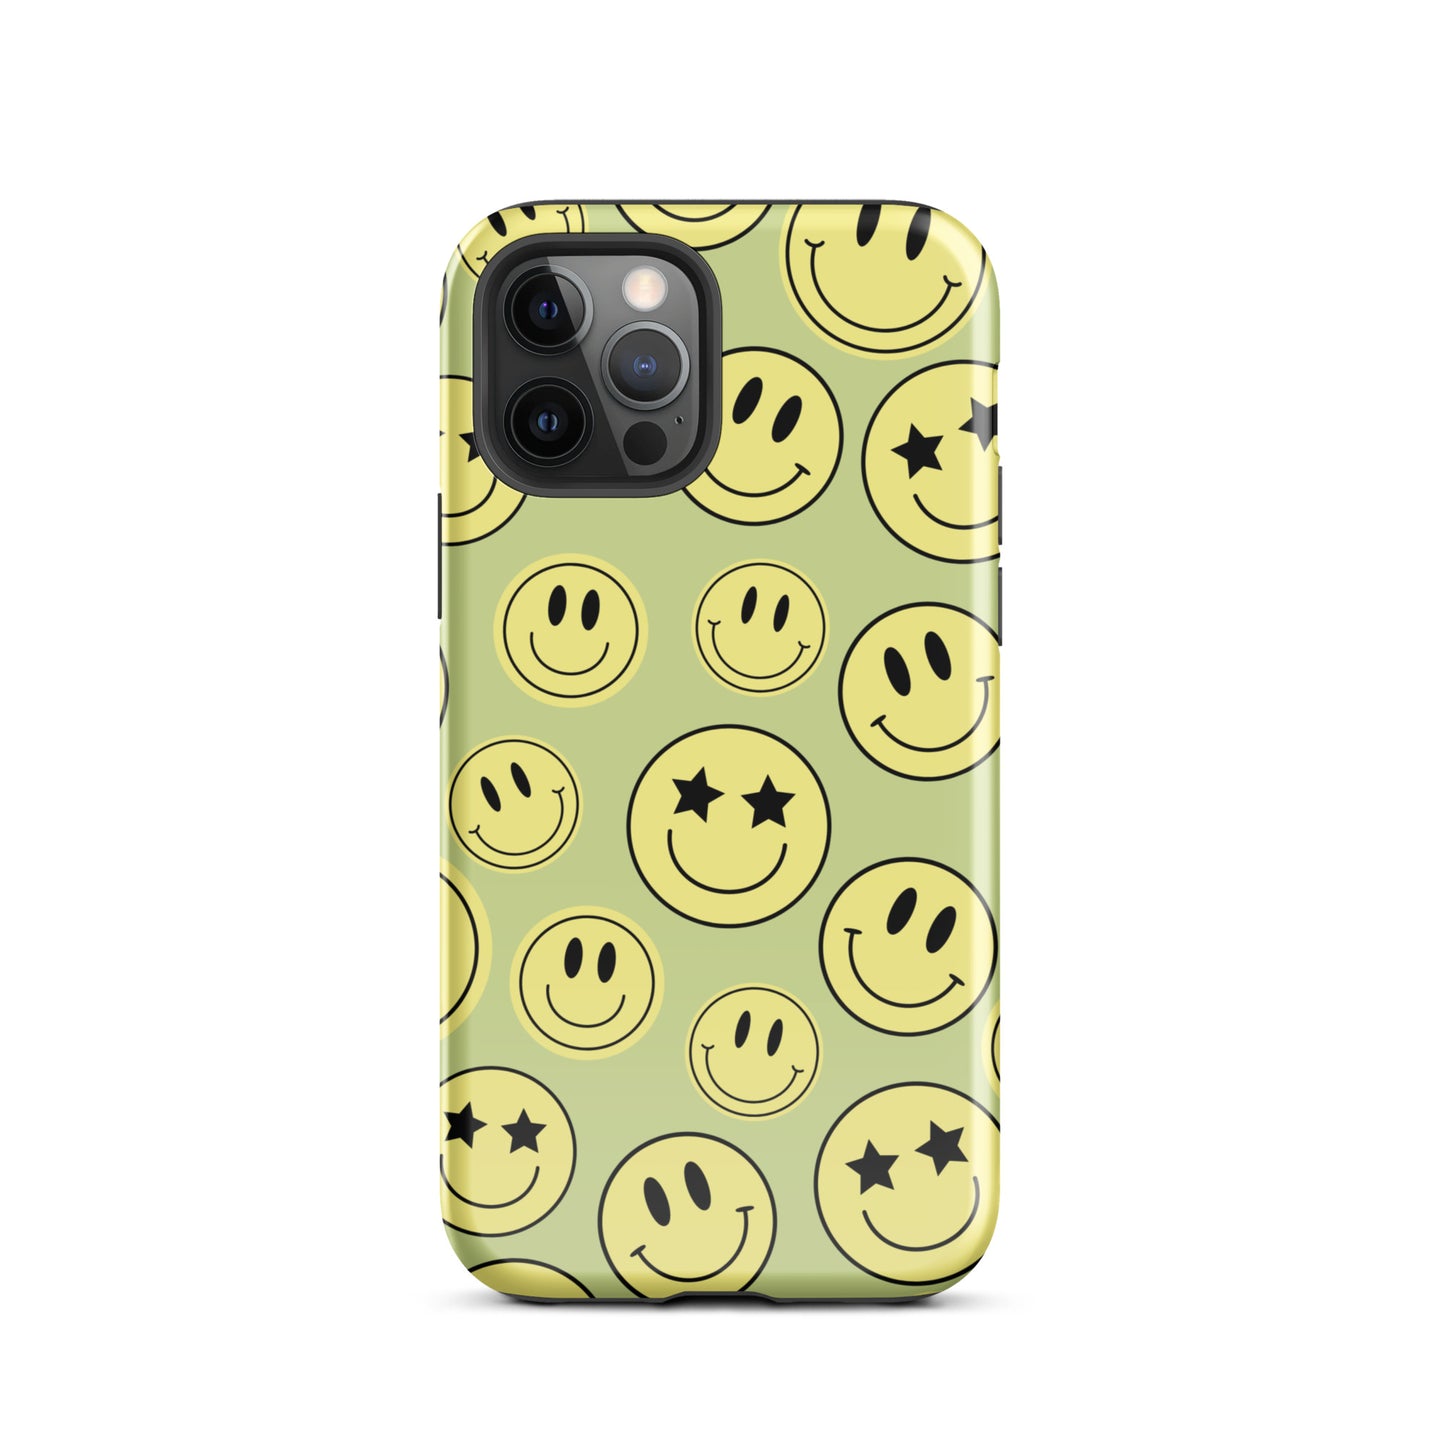 Green Smiley Faces iPhone Case